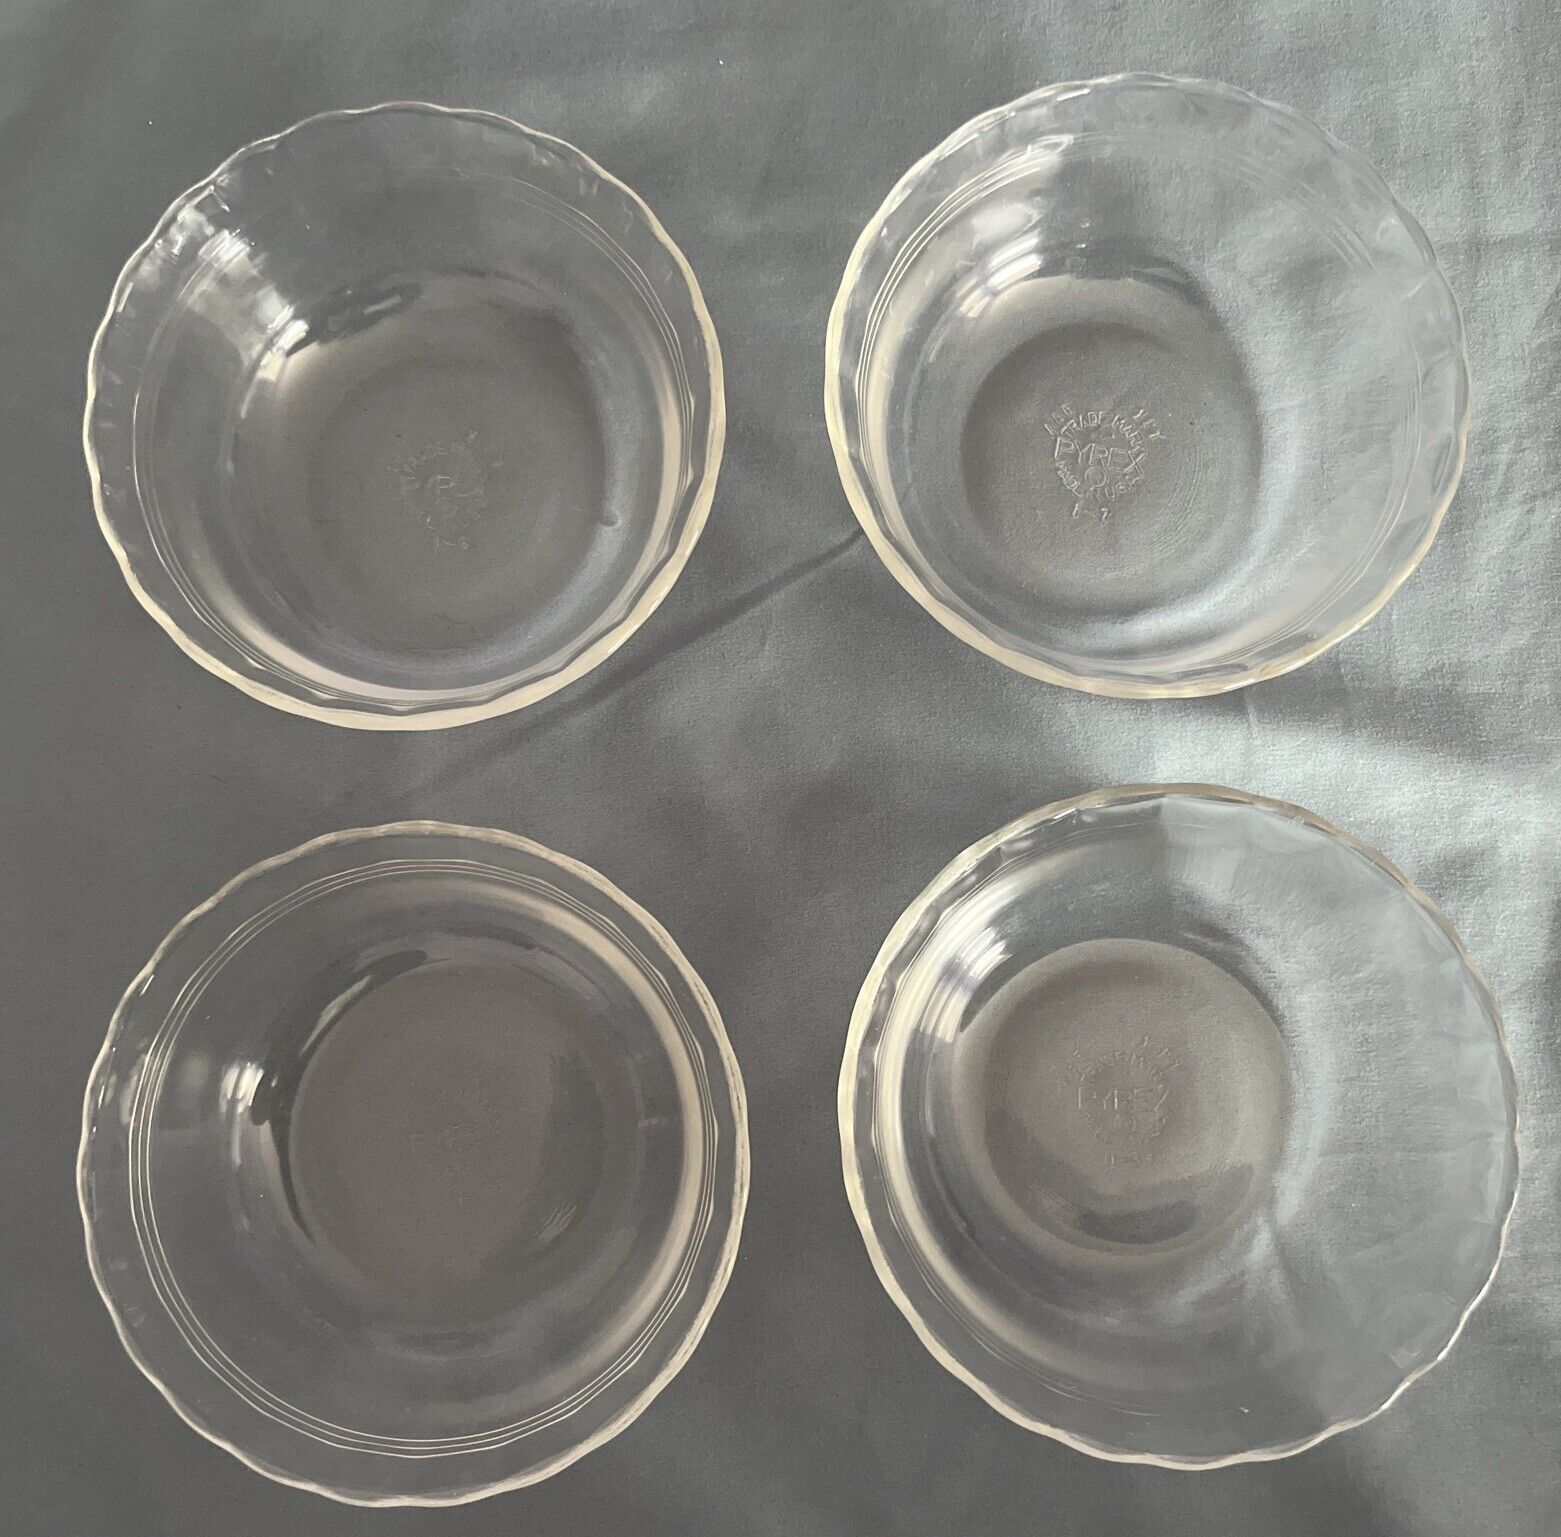 4 PYREX Scalloped Custard Cup 3 Ring Design Clear Glass Ramekin Dish 464 Vintage